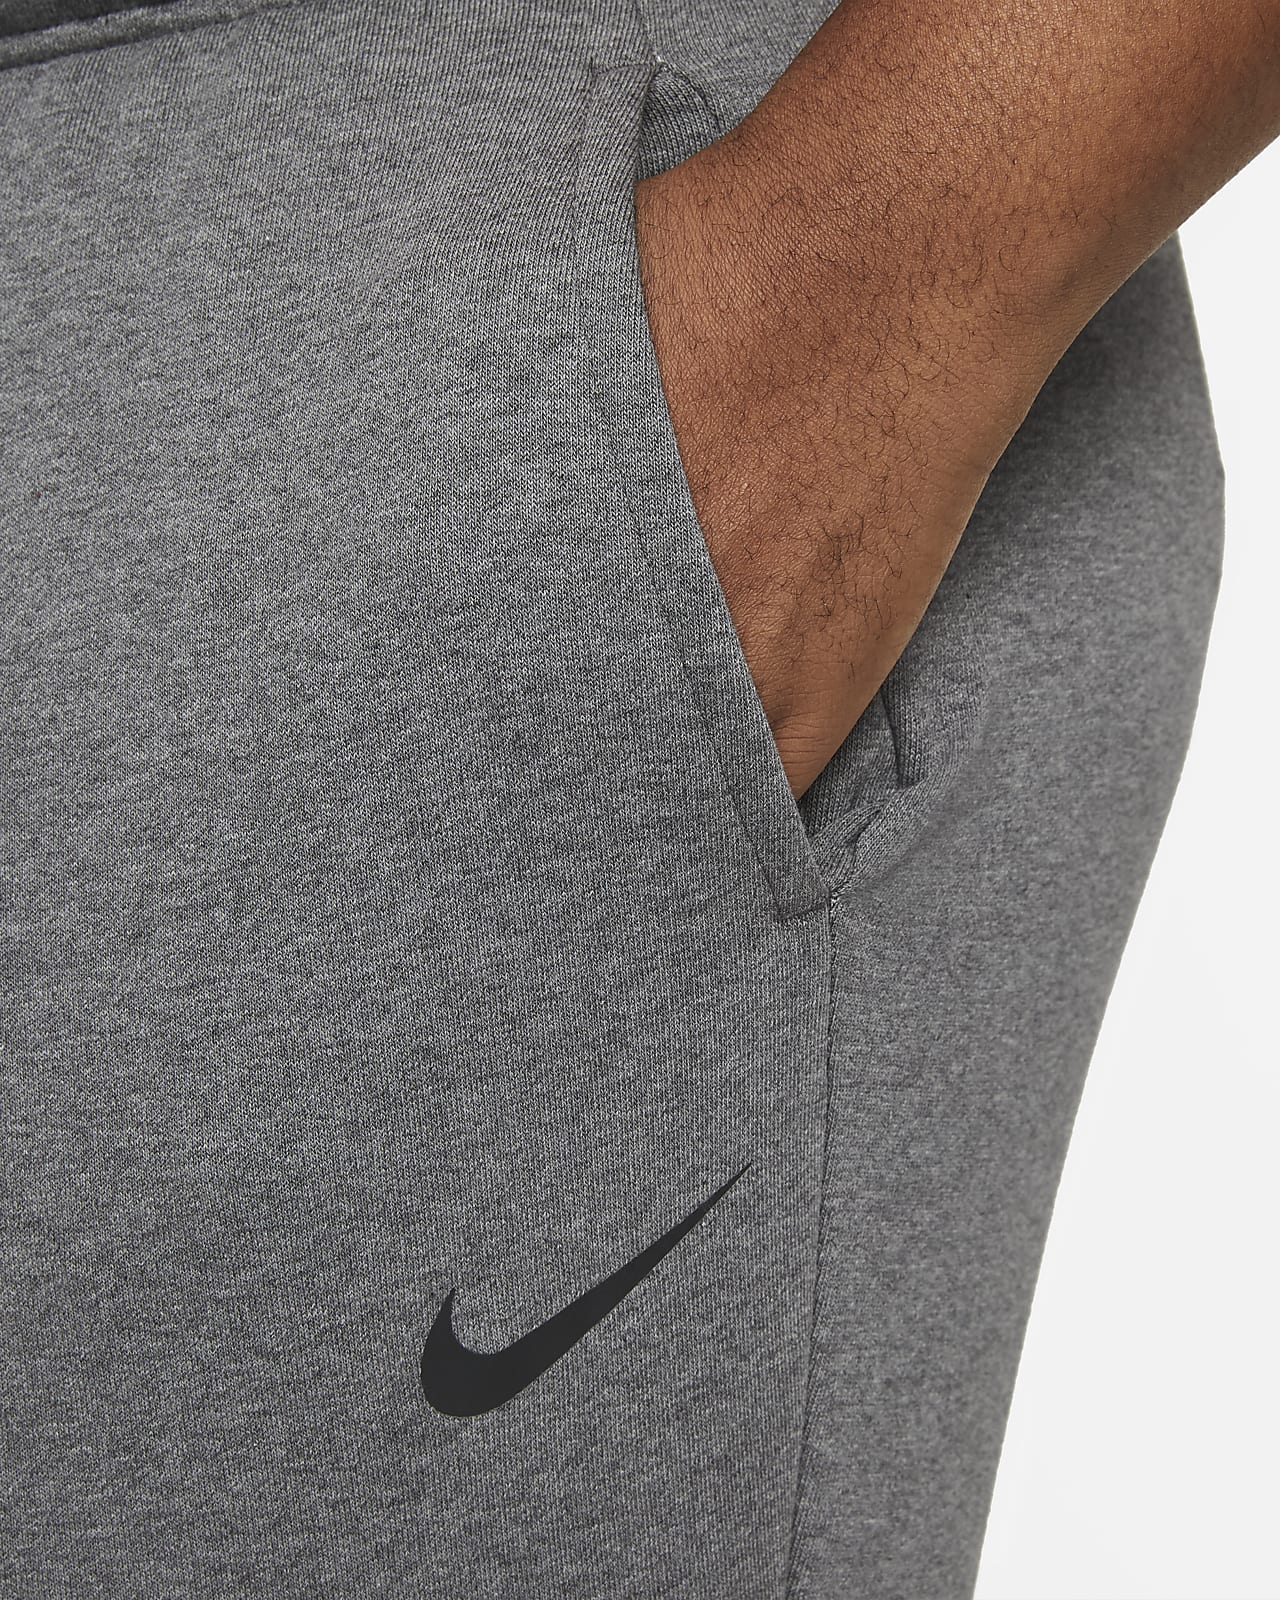 Nike Dri-FIT Men's Training Pants (Big 